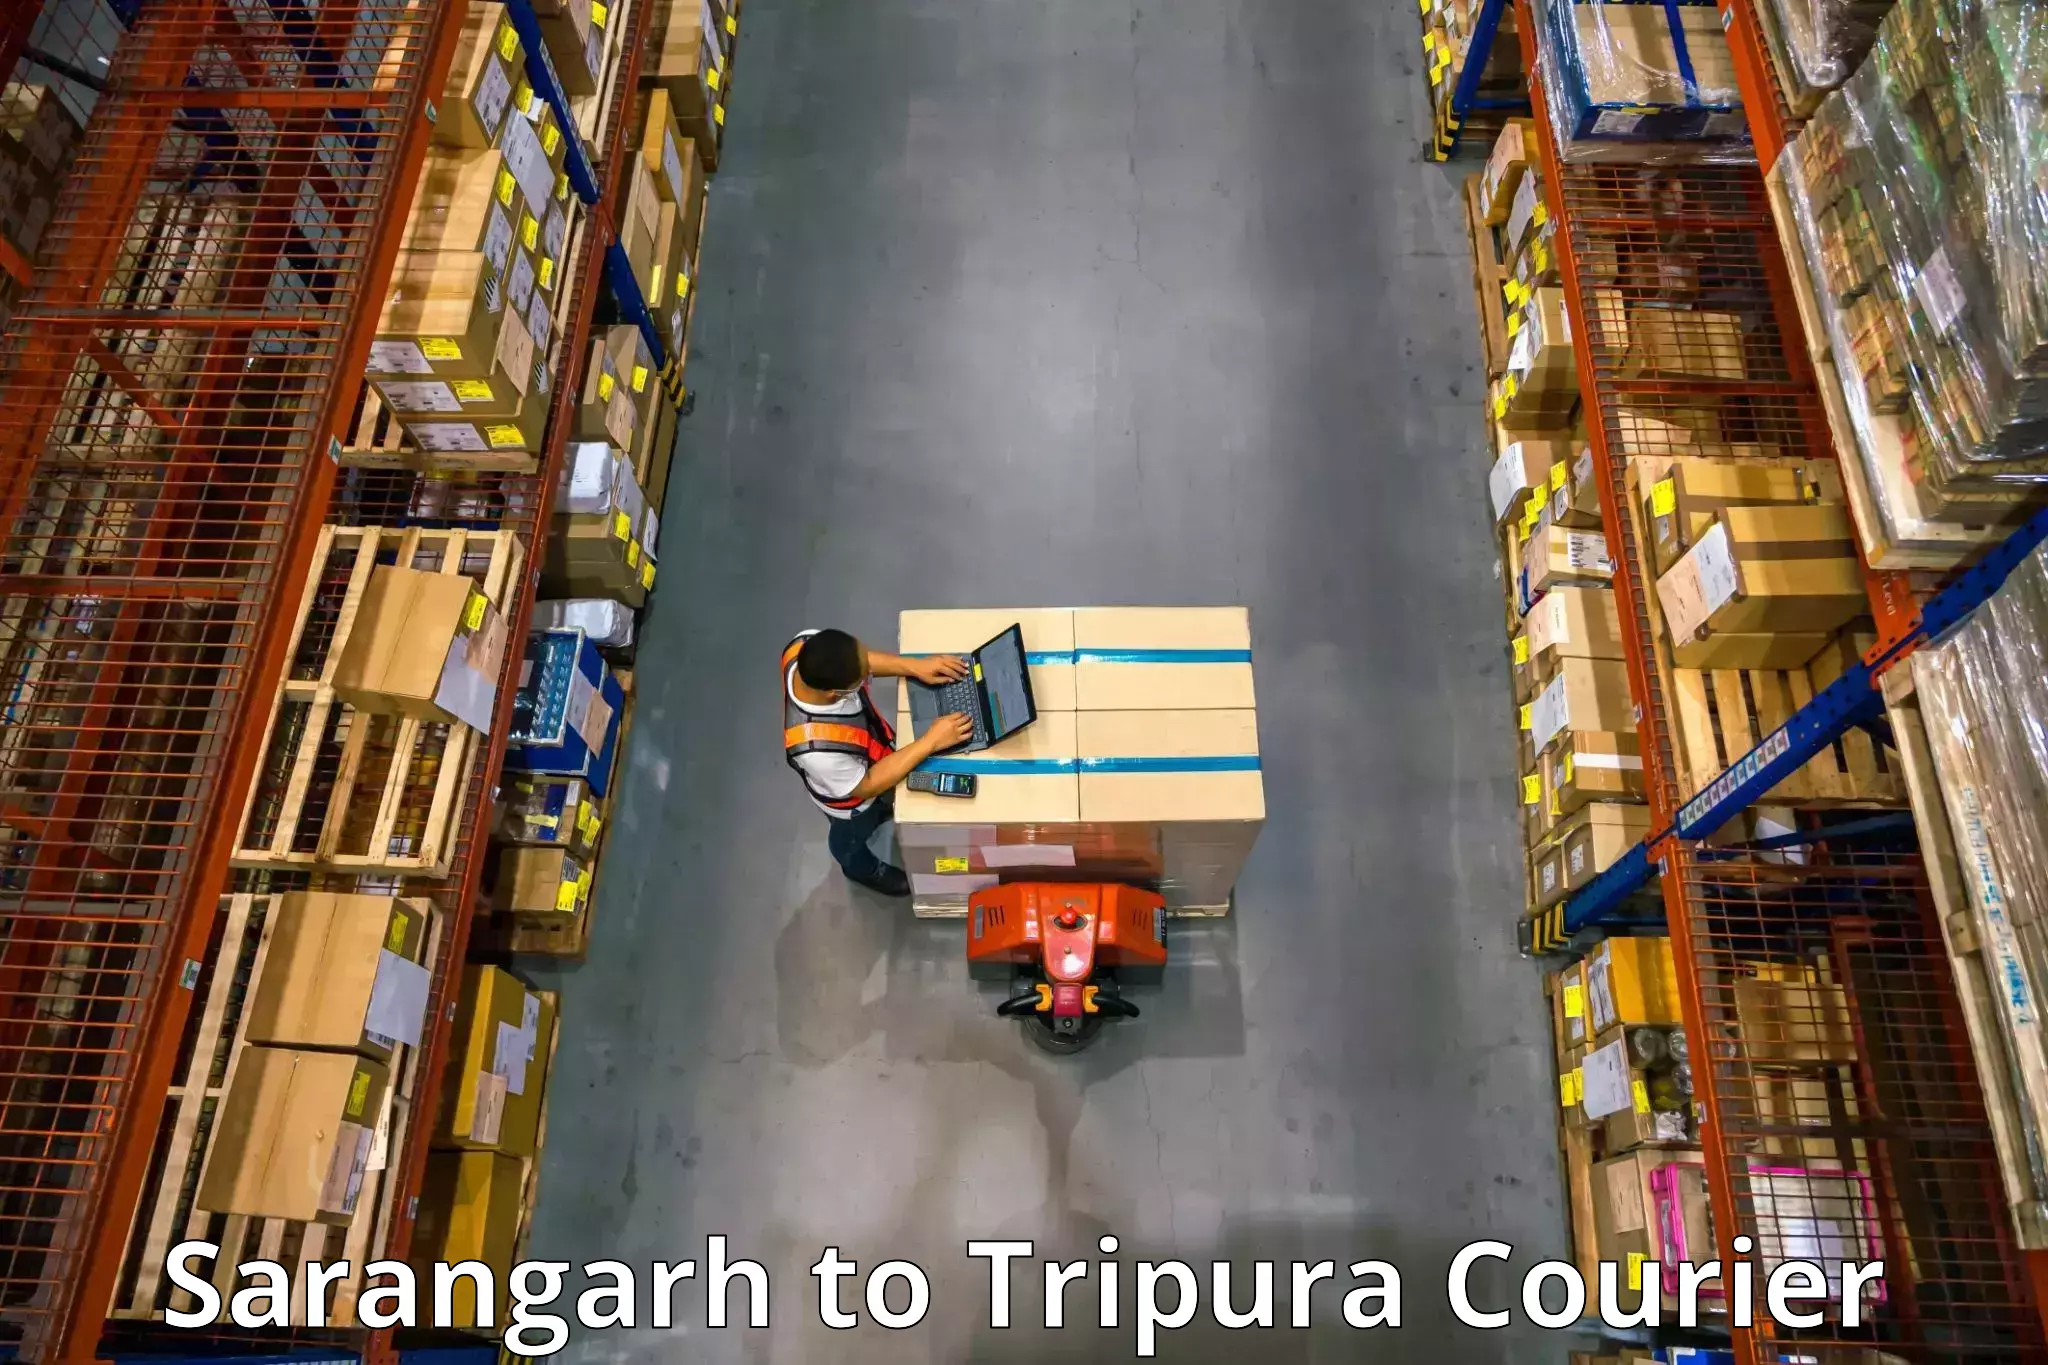 Professional moving company Sarangarh to West Tripura